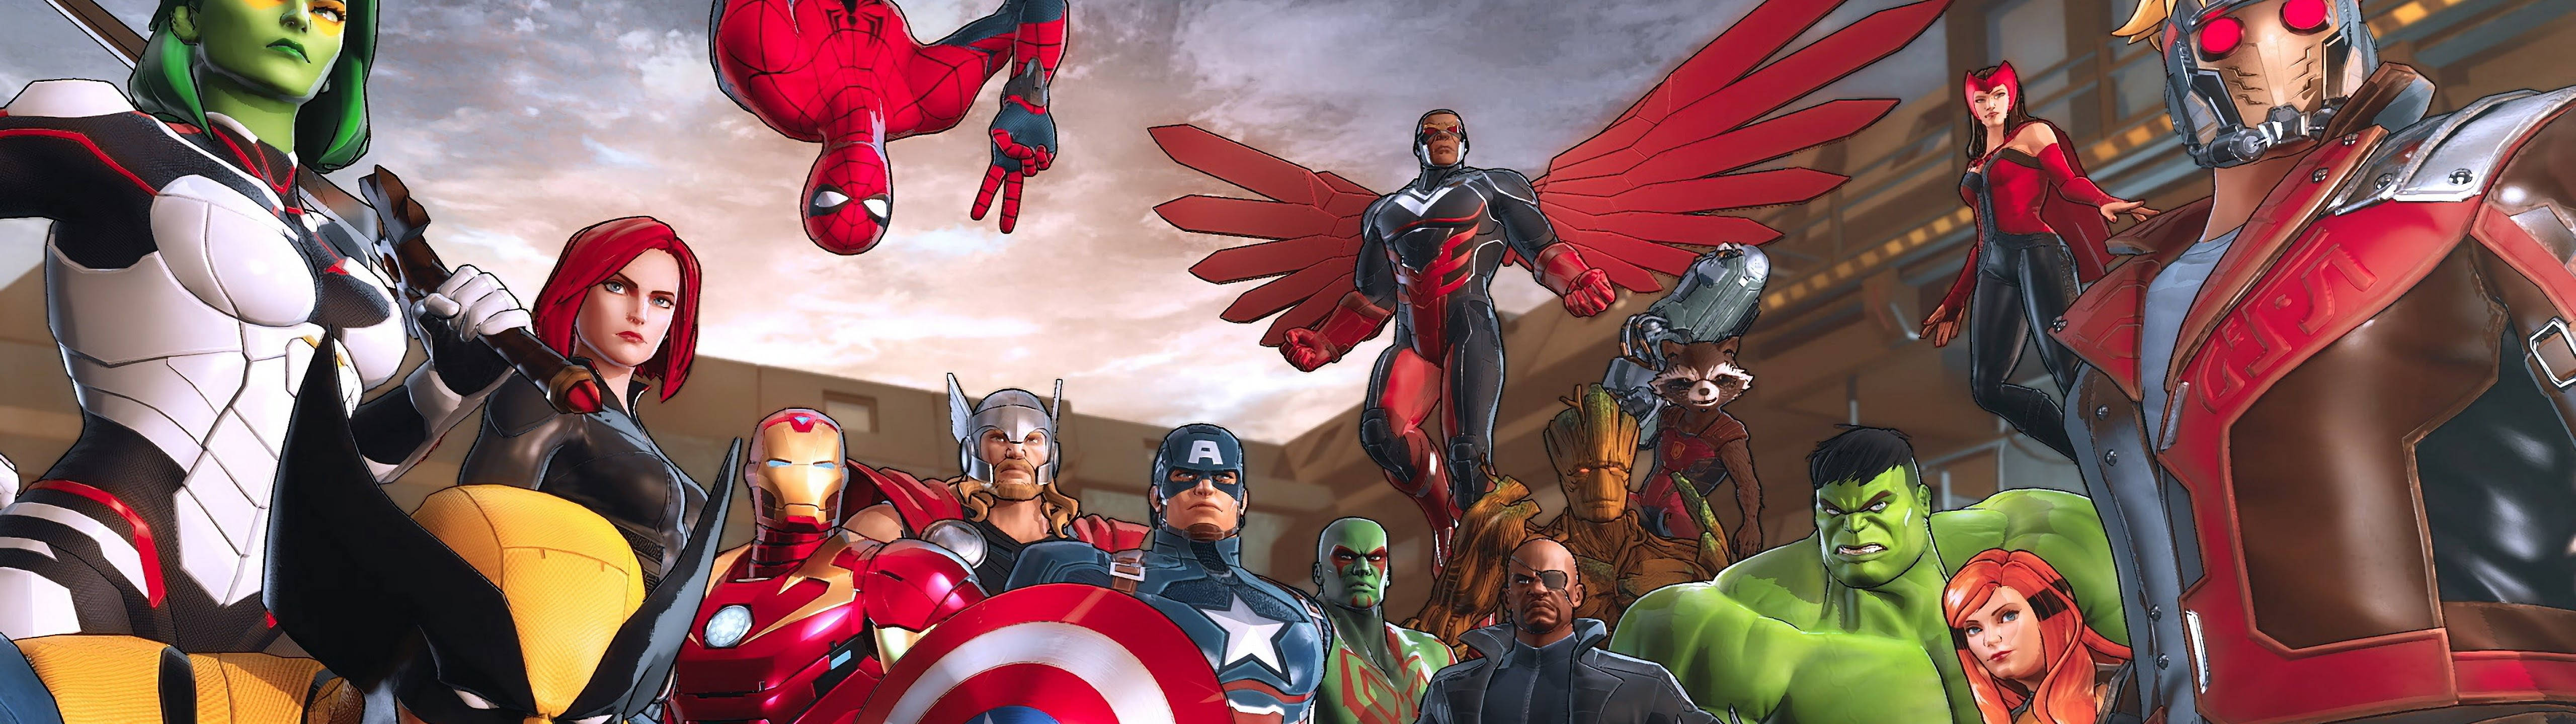 Marvel Comic Characters 5120 X 1440 Wallpaper